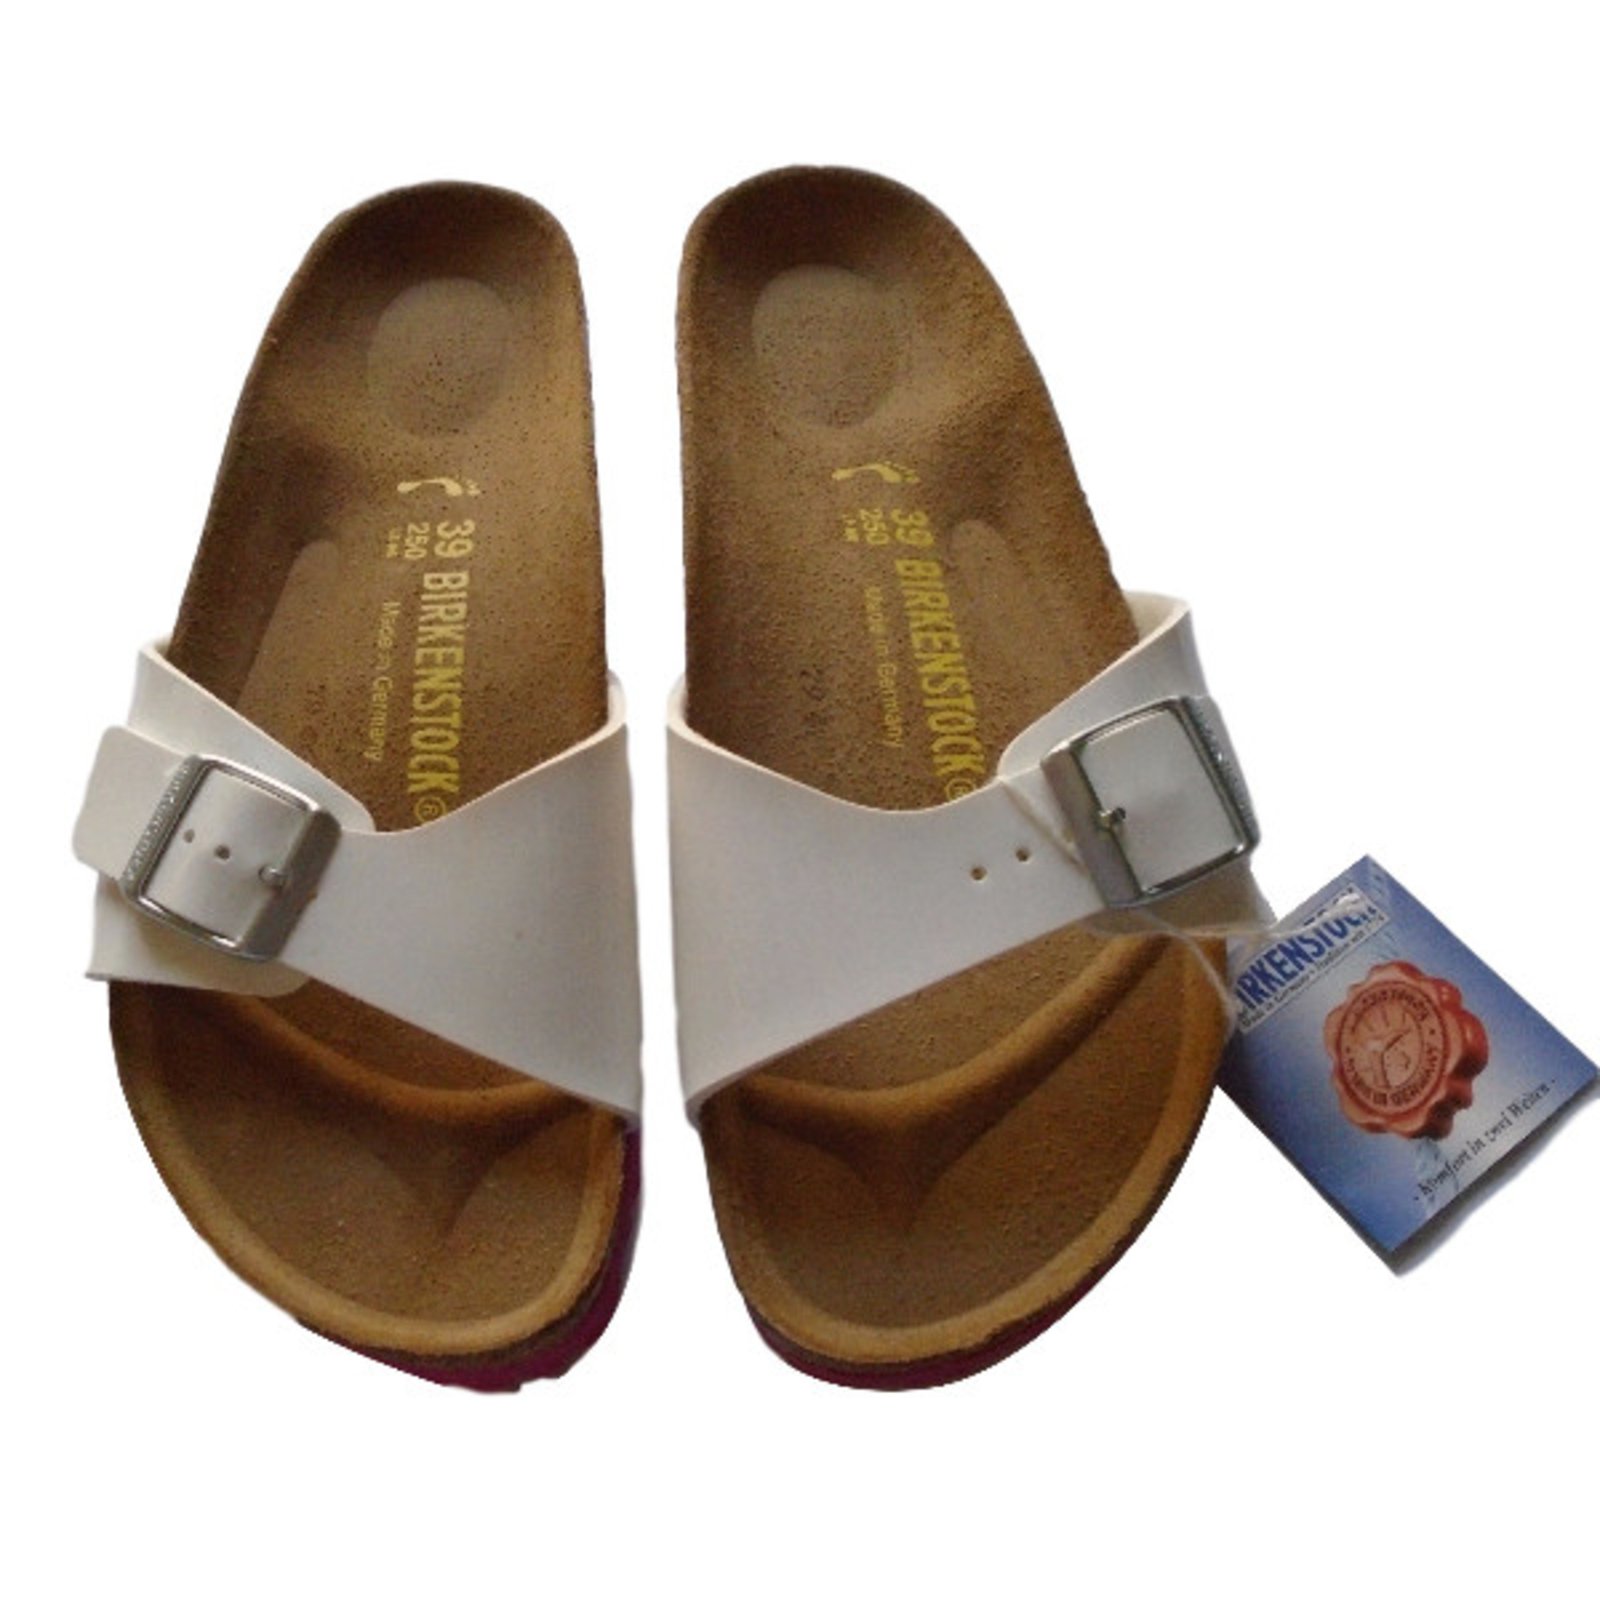 patent leather birkenstock sandals